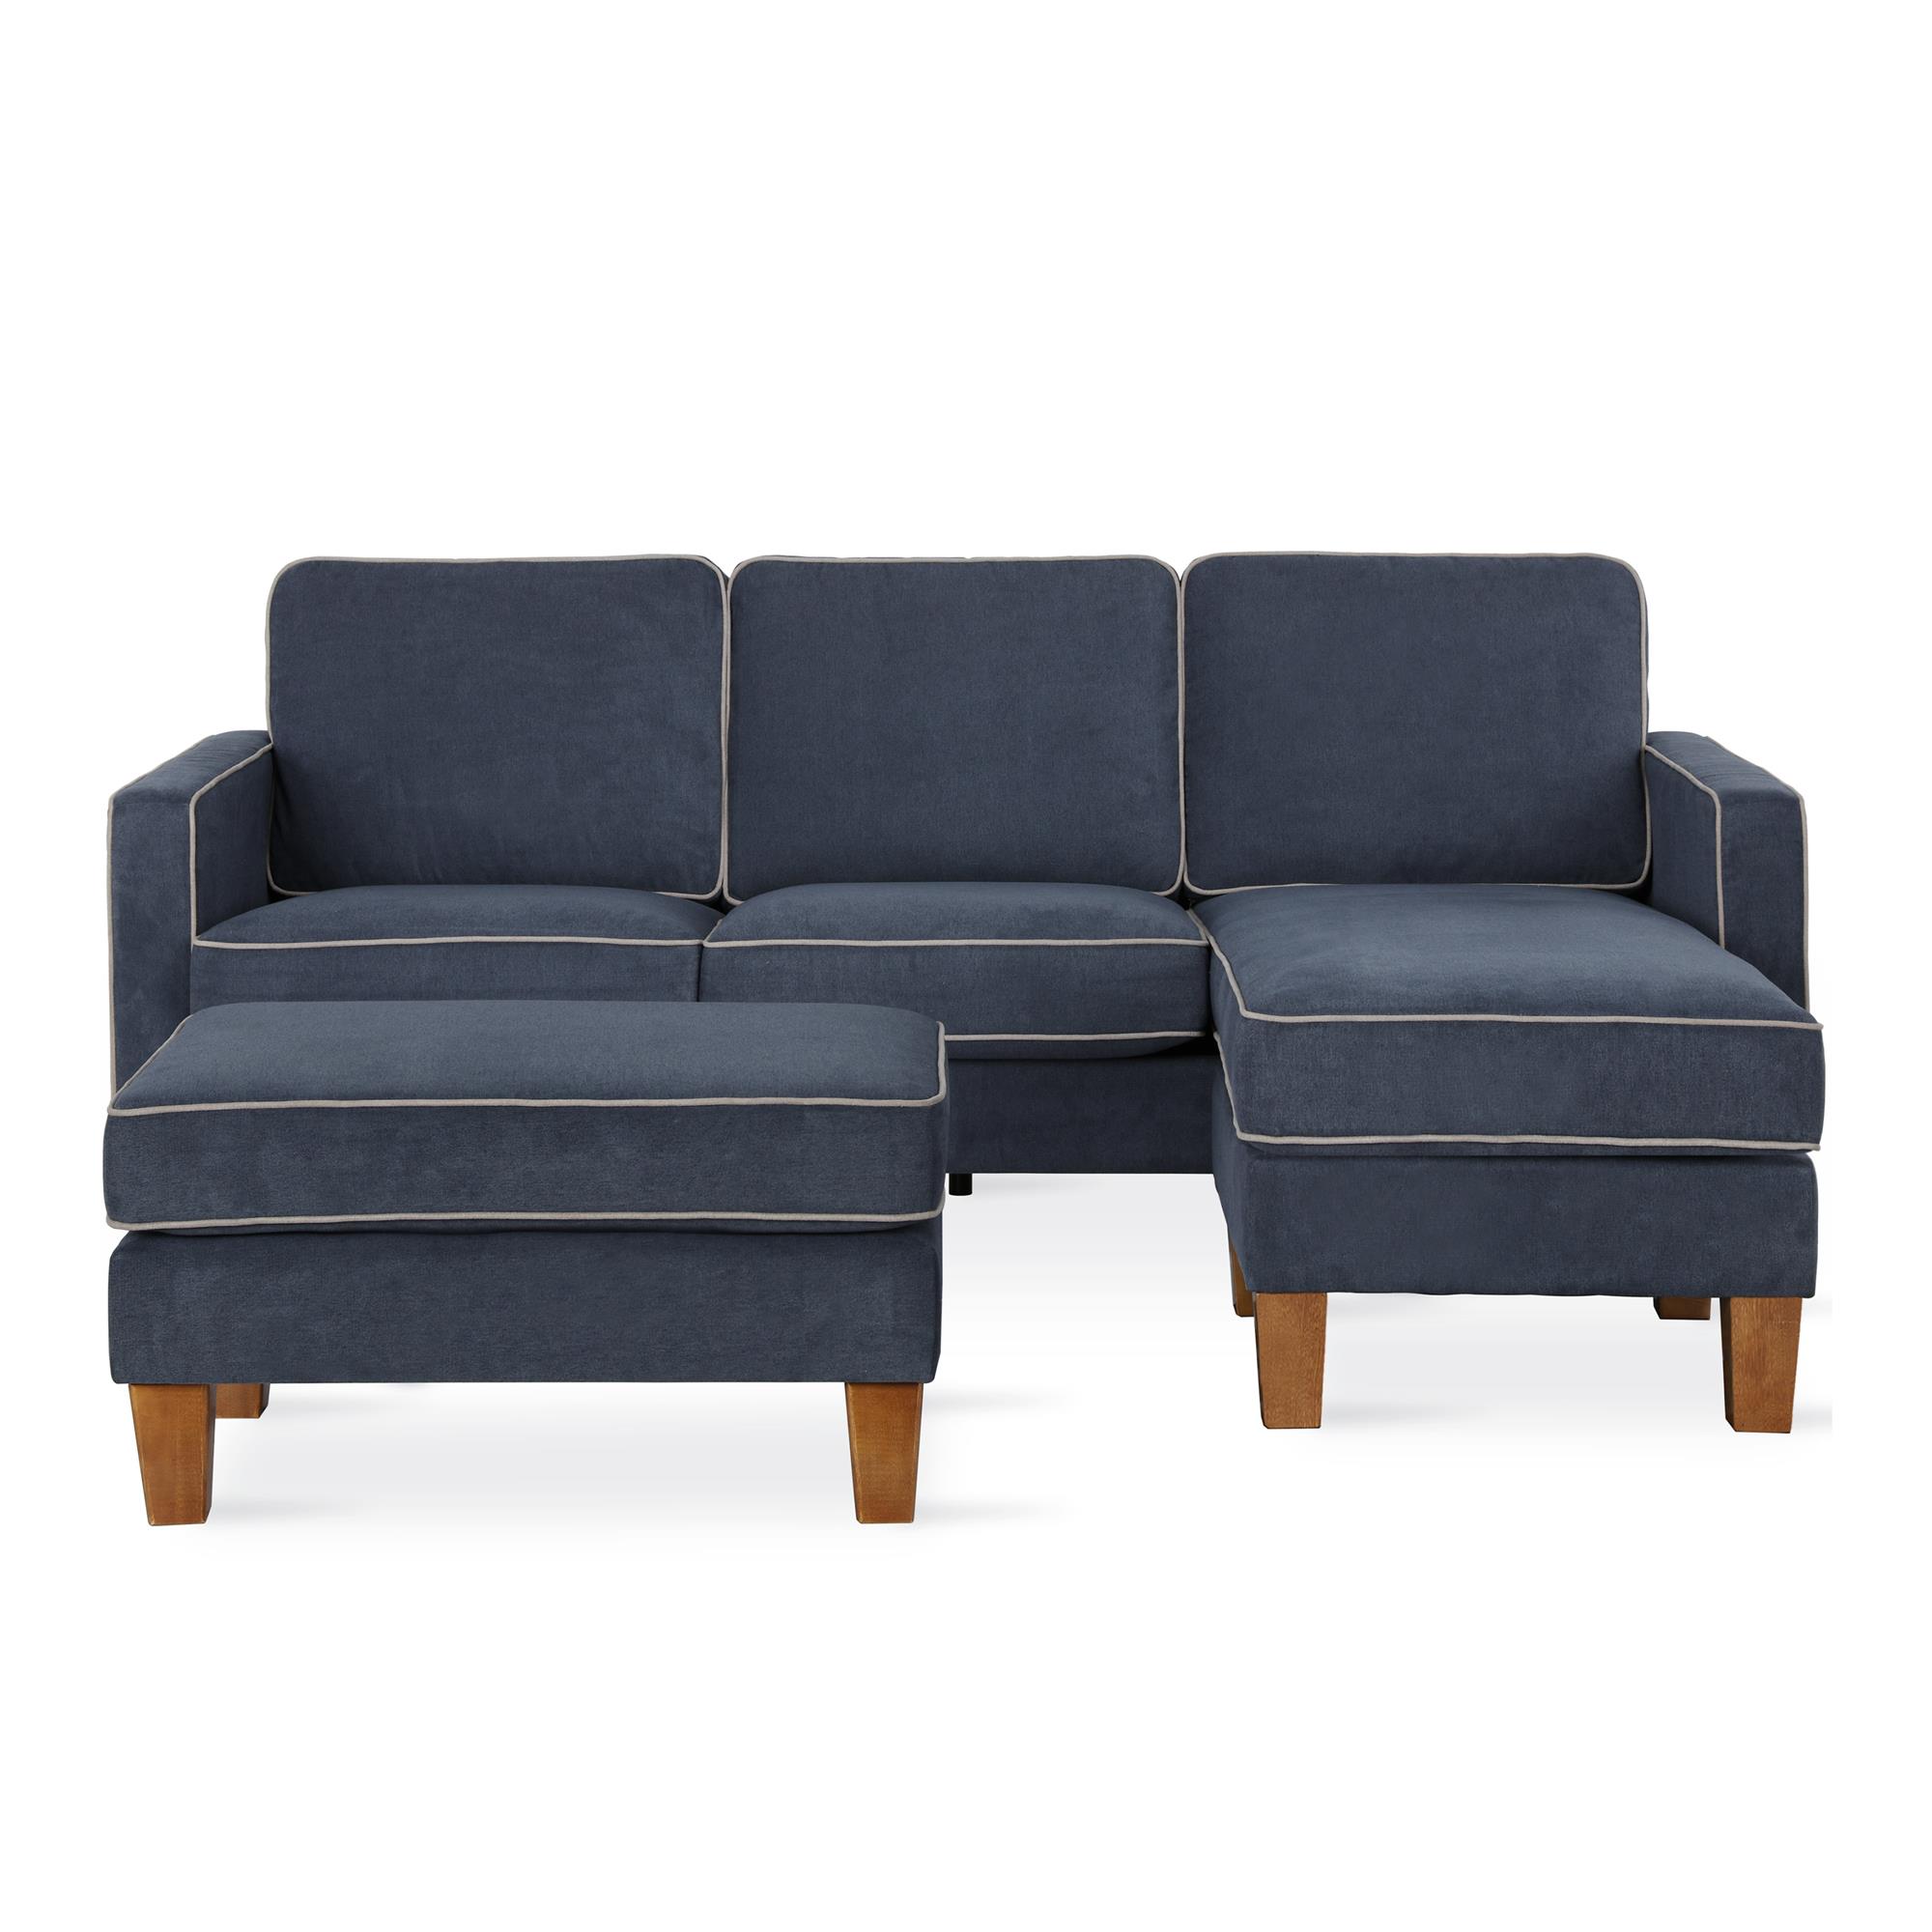 Novogratz Bowen Sectional Sofa with Contrast Welting, Blue, (Blue) - image 3 of 10